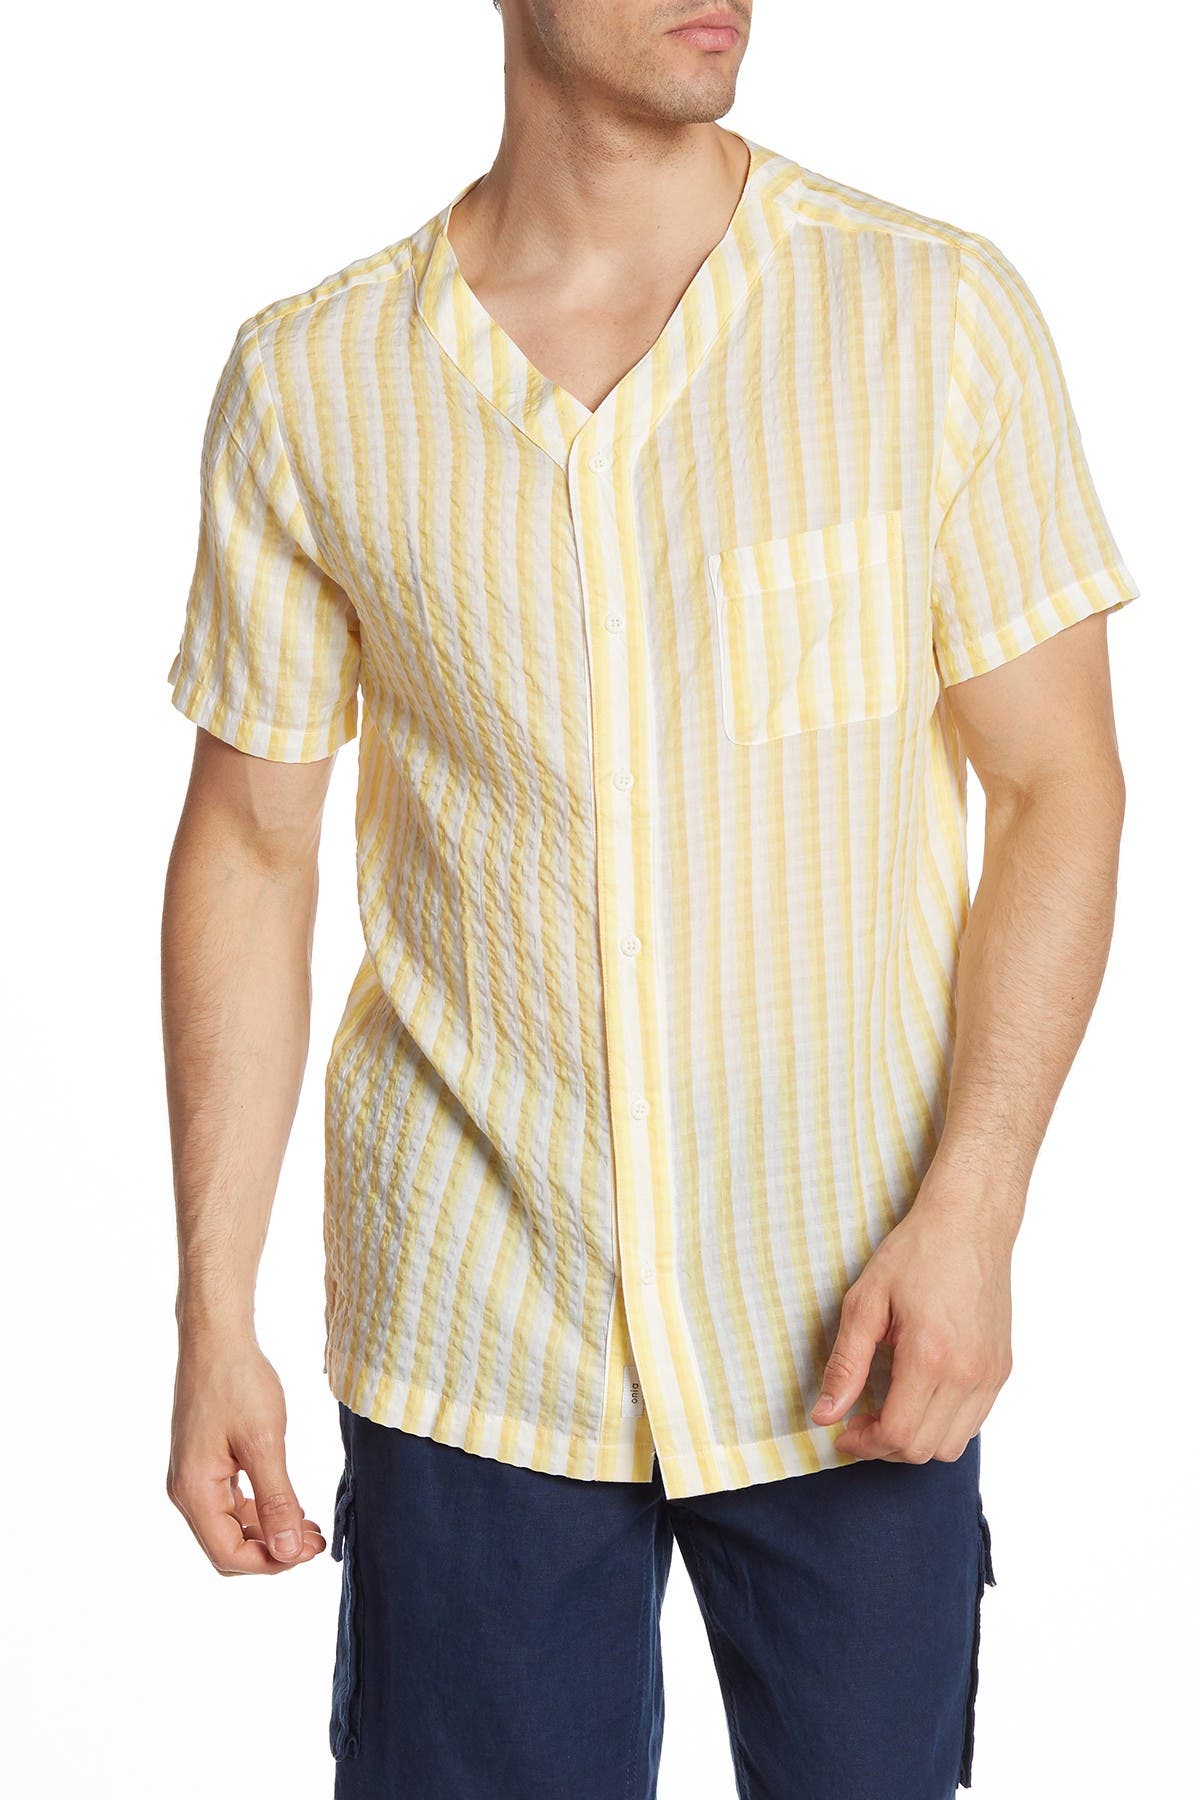 Onia Luca Shirt In Light/pastel Yellow